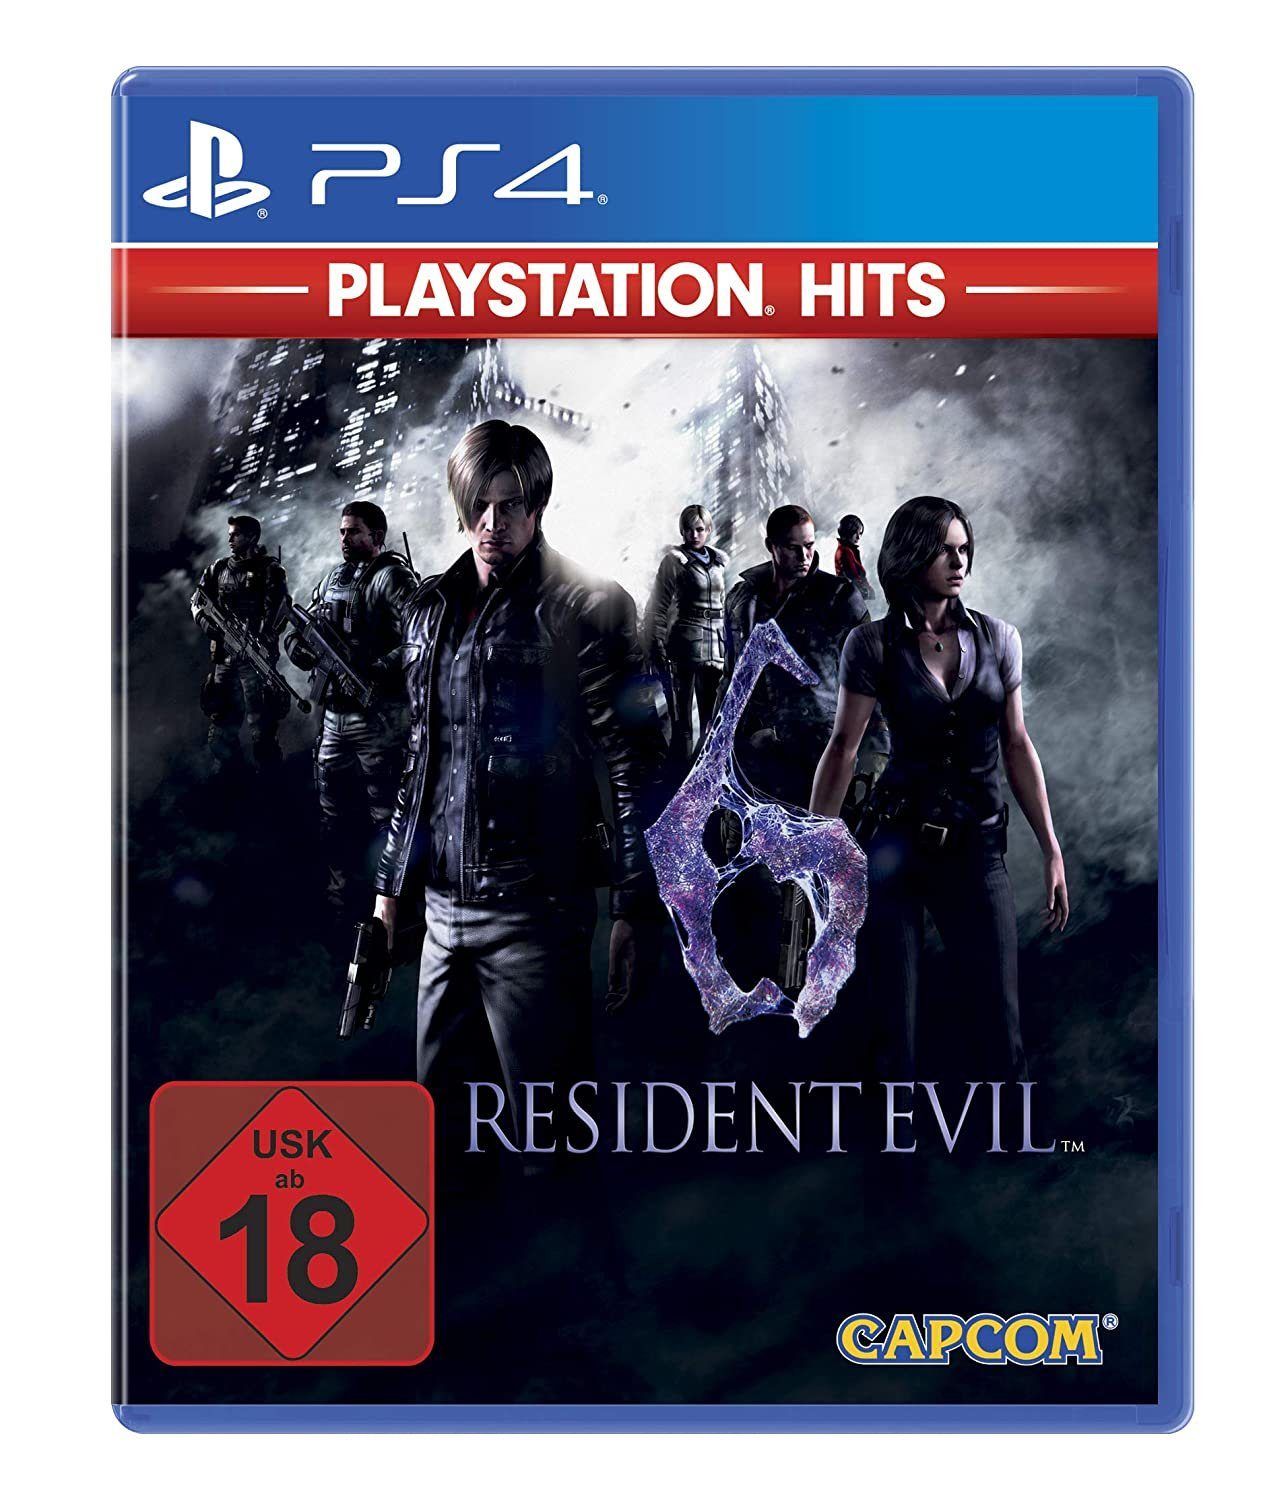 Hits 6 PS 4 Evil PlayStation Capcom Resident